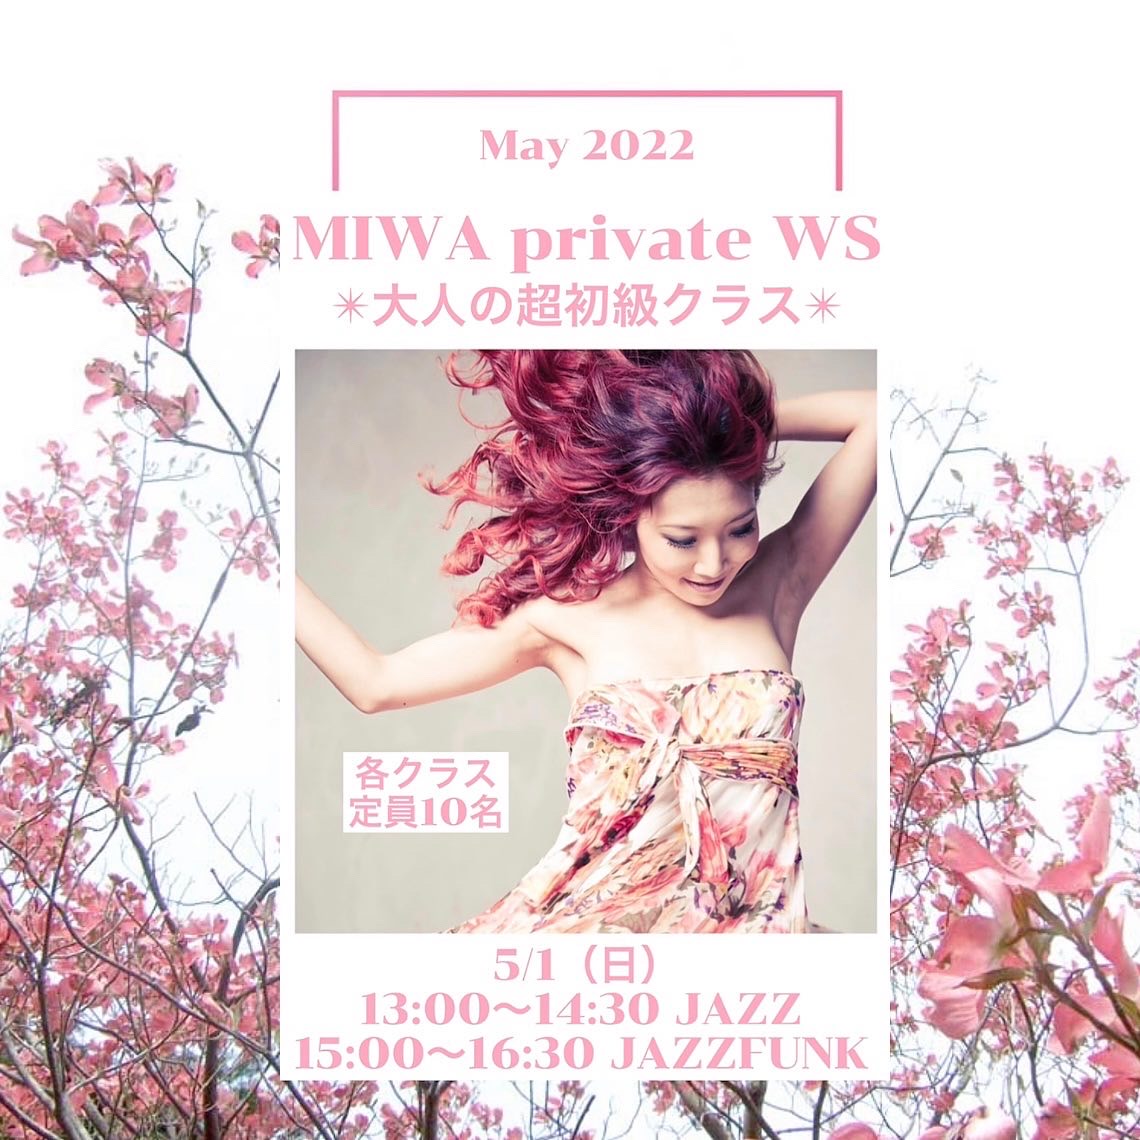 ５/1 MIWA private WS告知写真